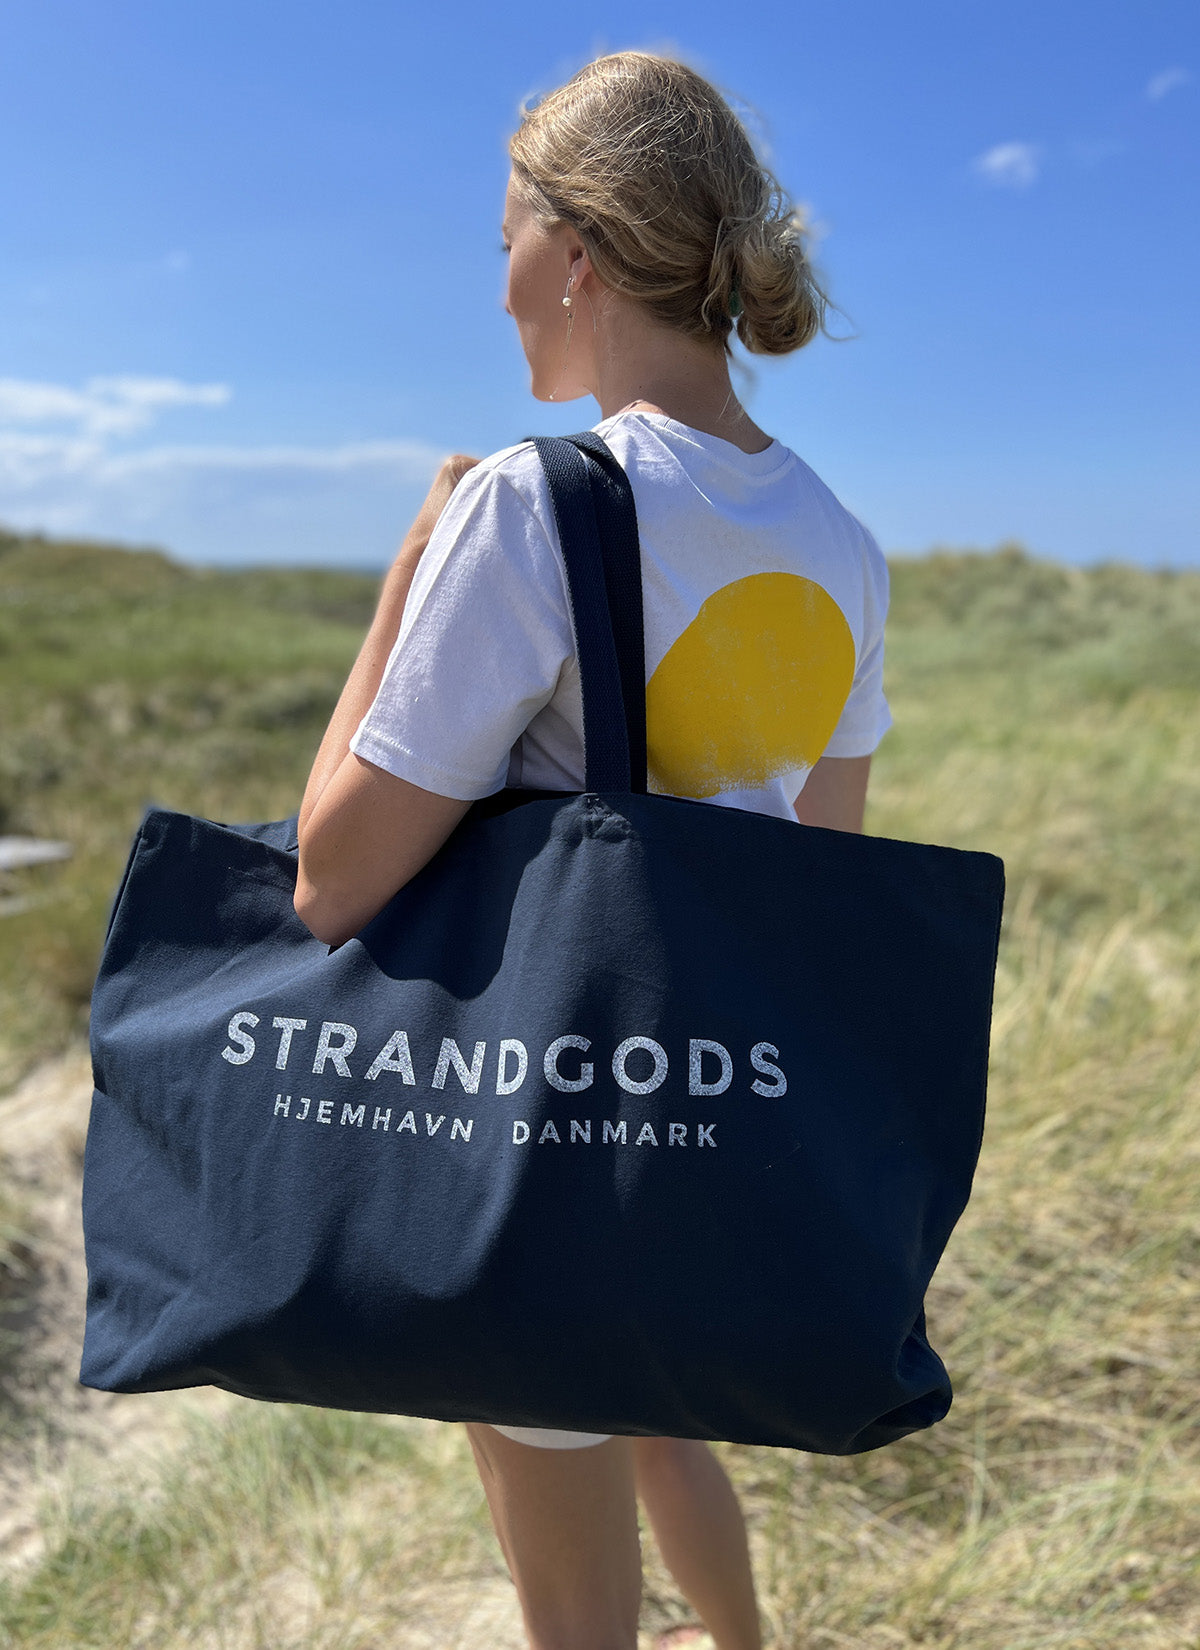 Strandtasche - Oversized